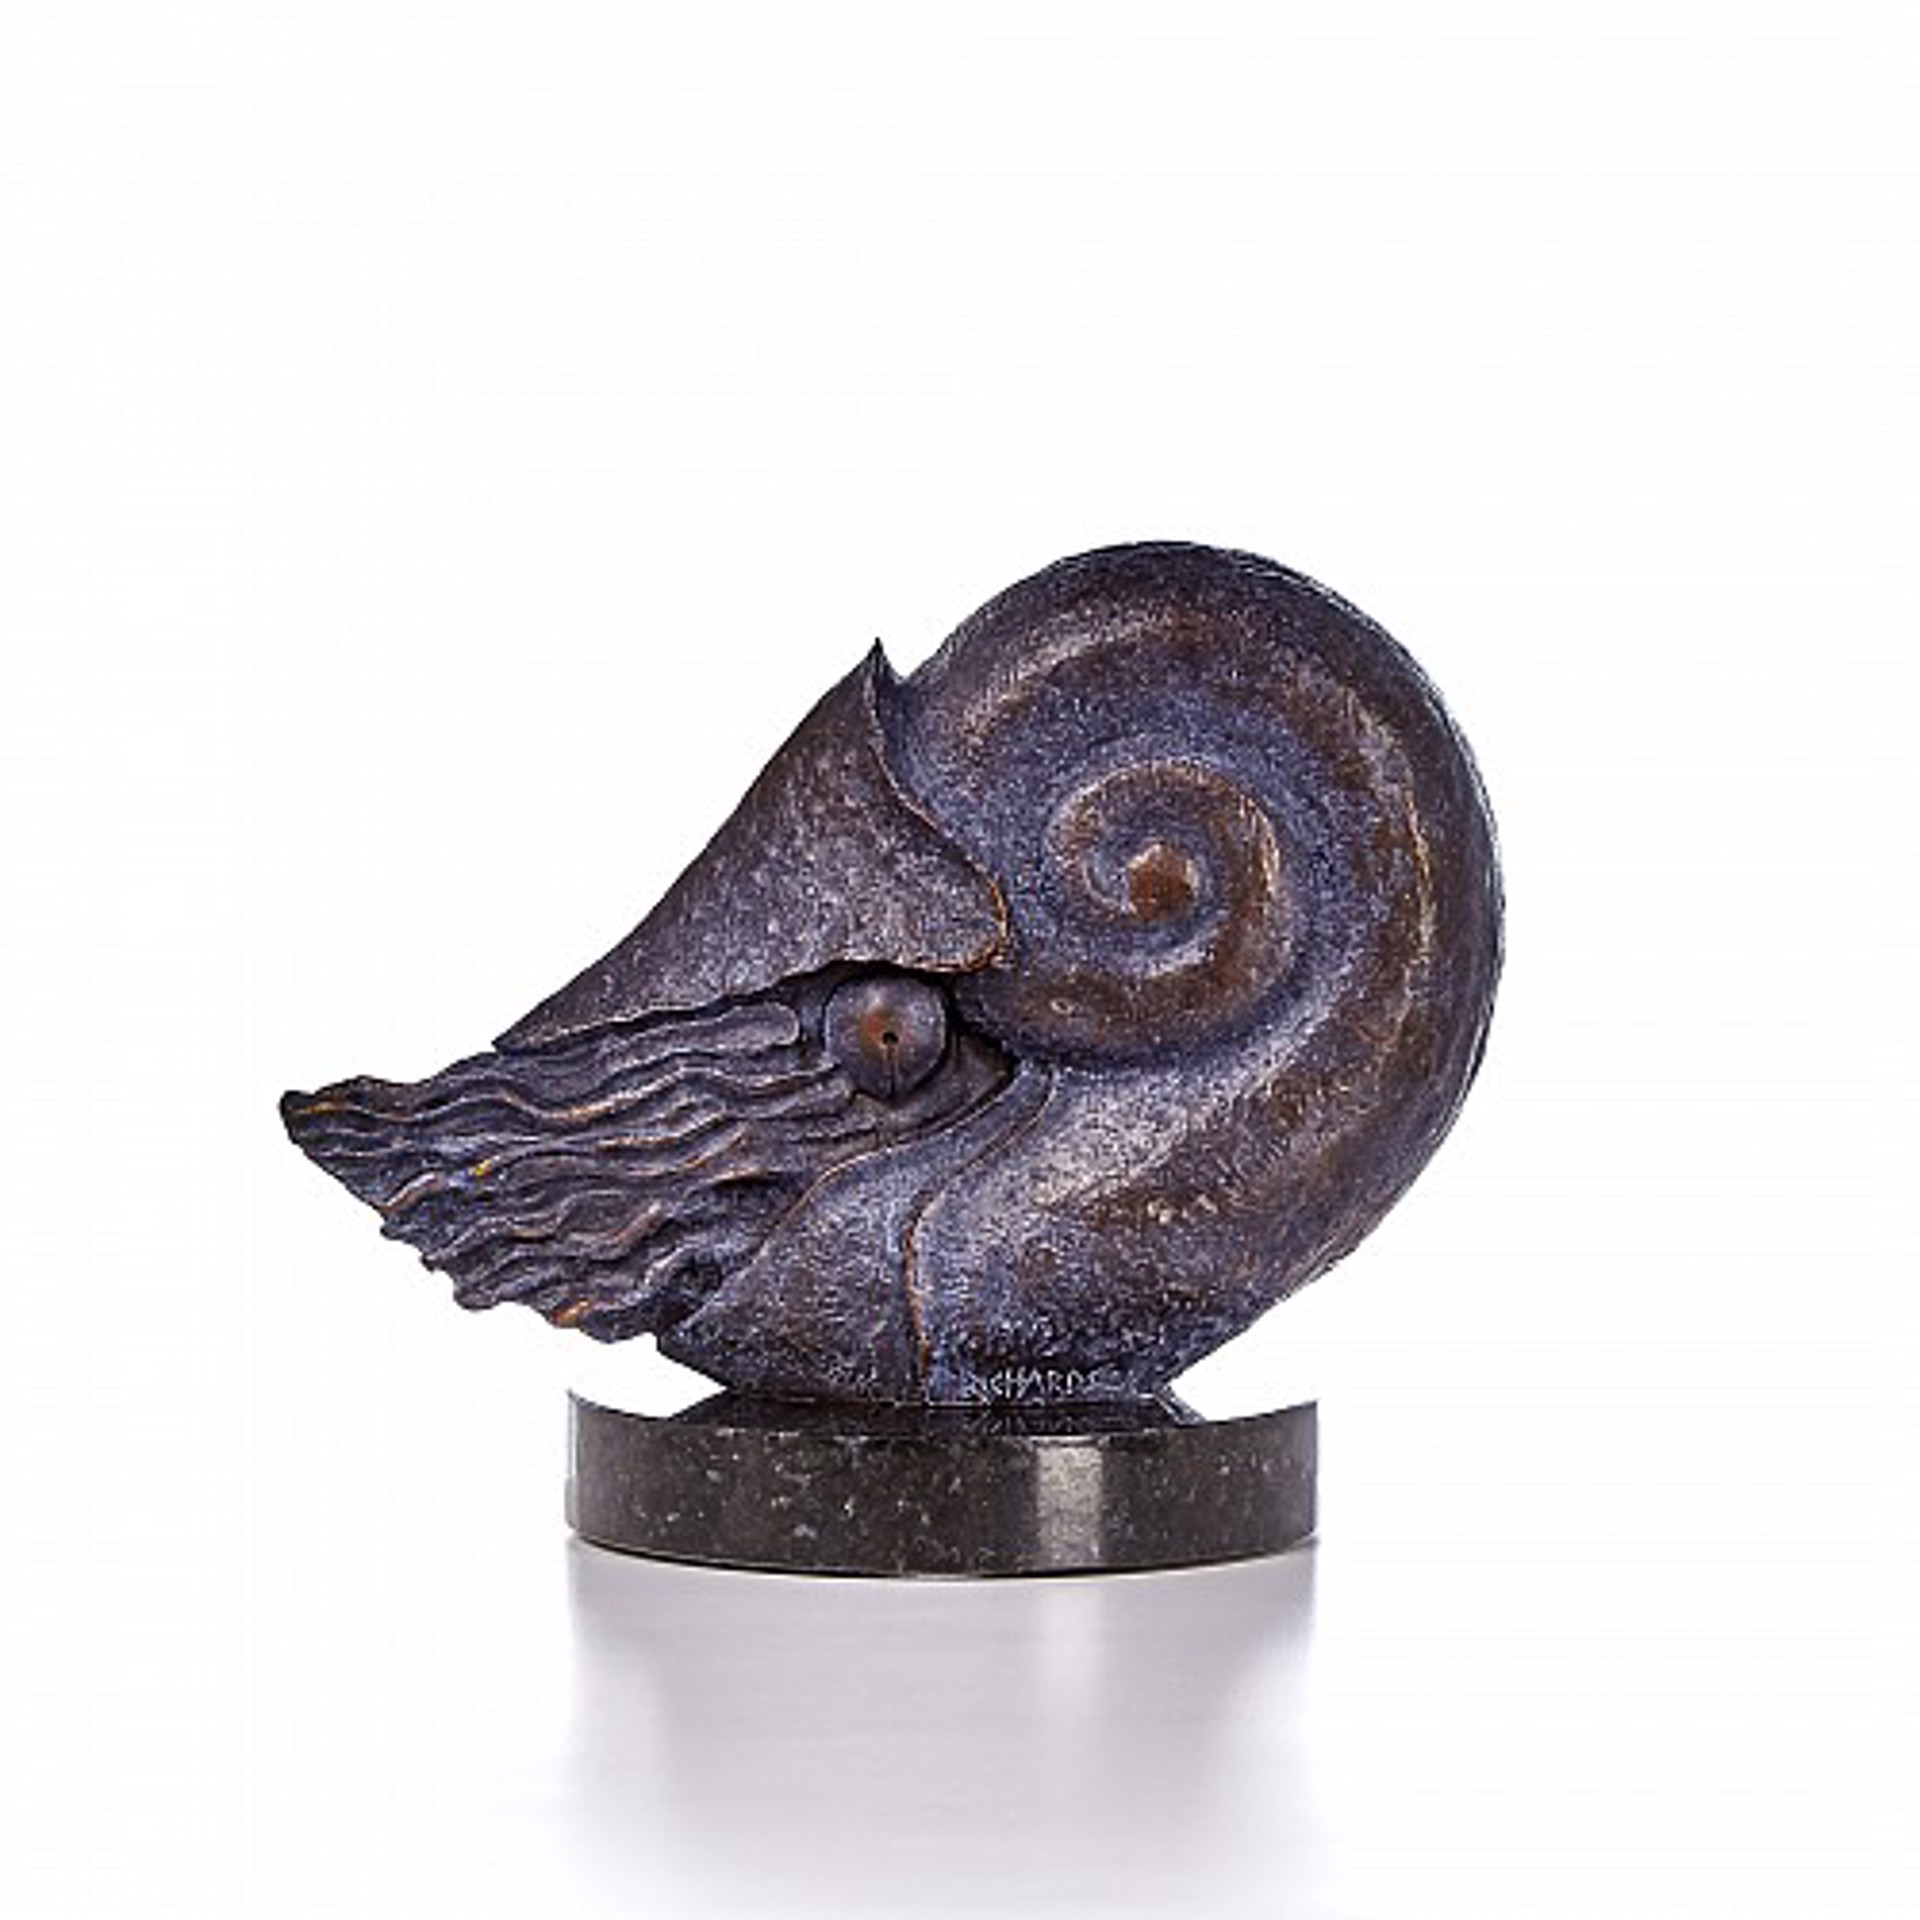 Chambered Nautilus by David Richardson (sculptor)